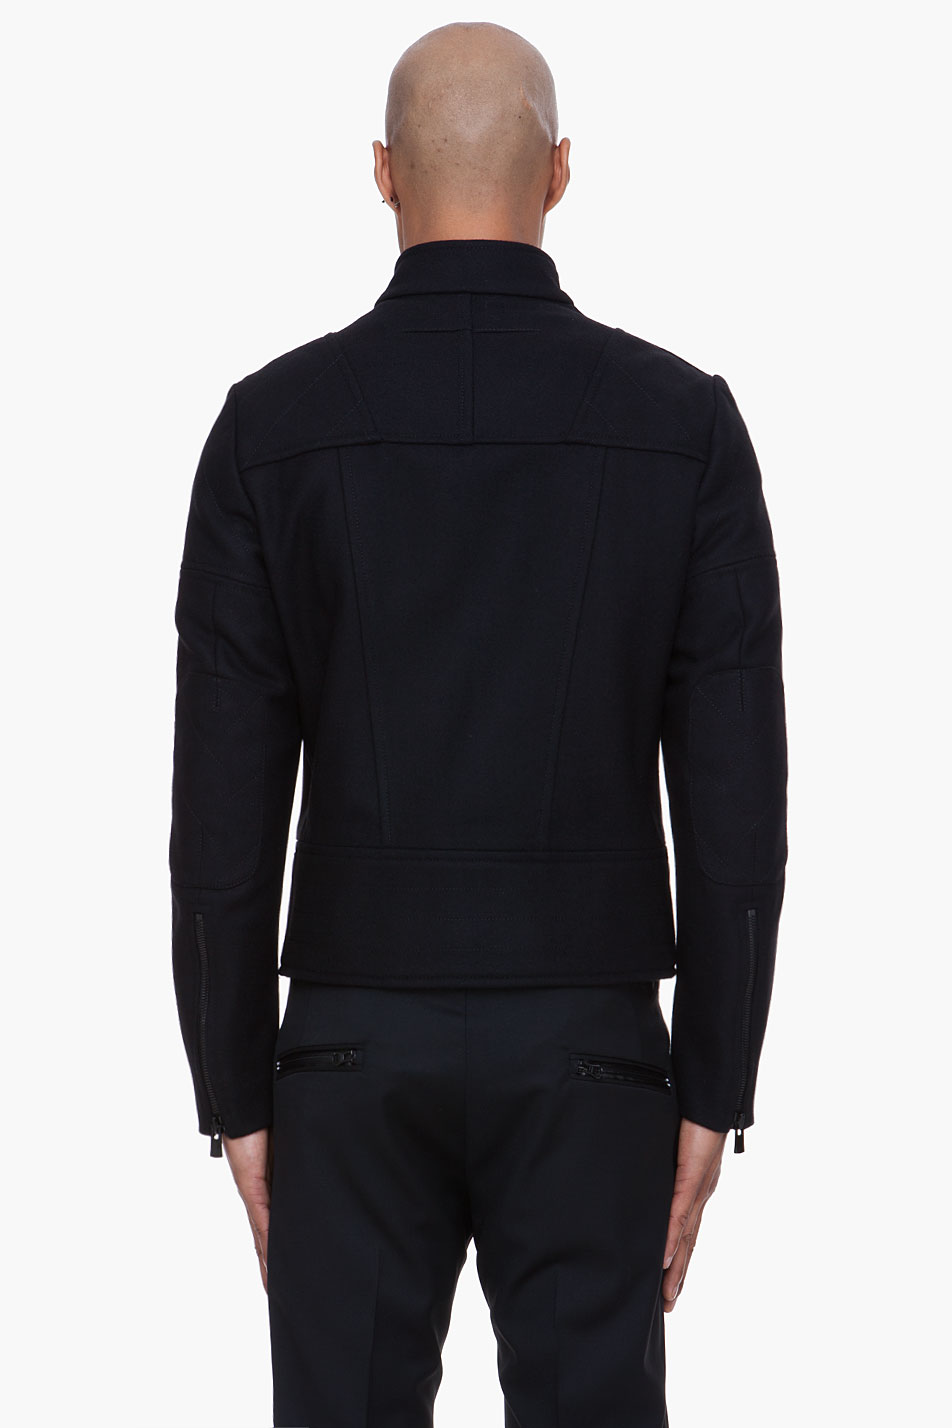 Lyst - Givenchy Wool Biker Jacket in Black for Men